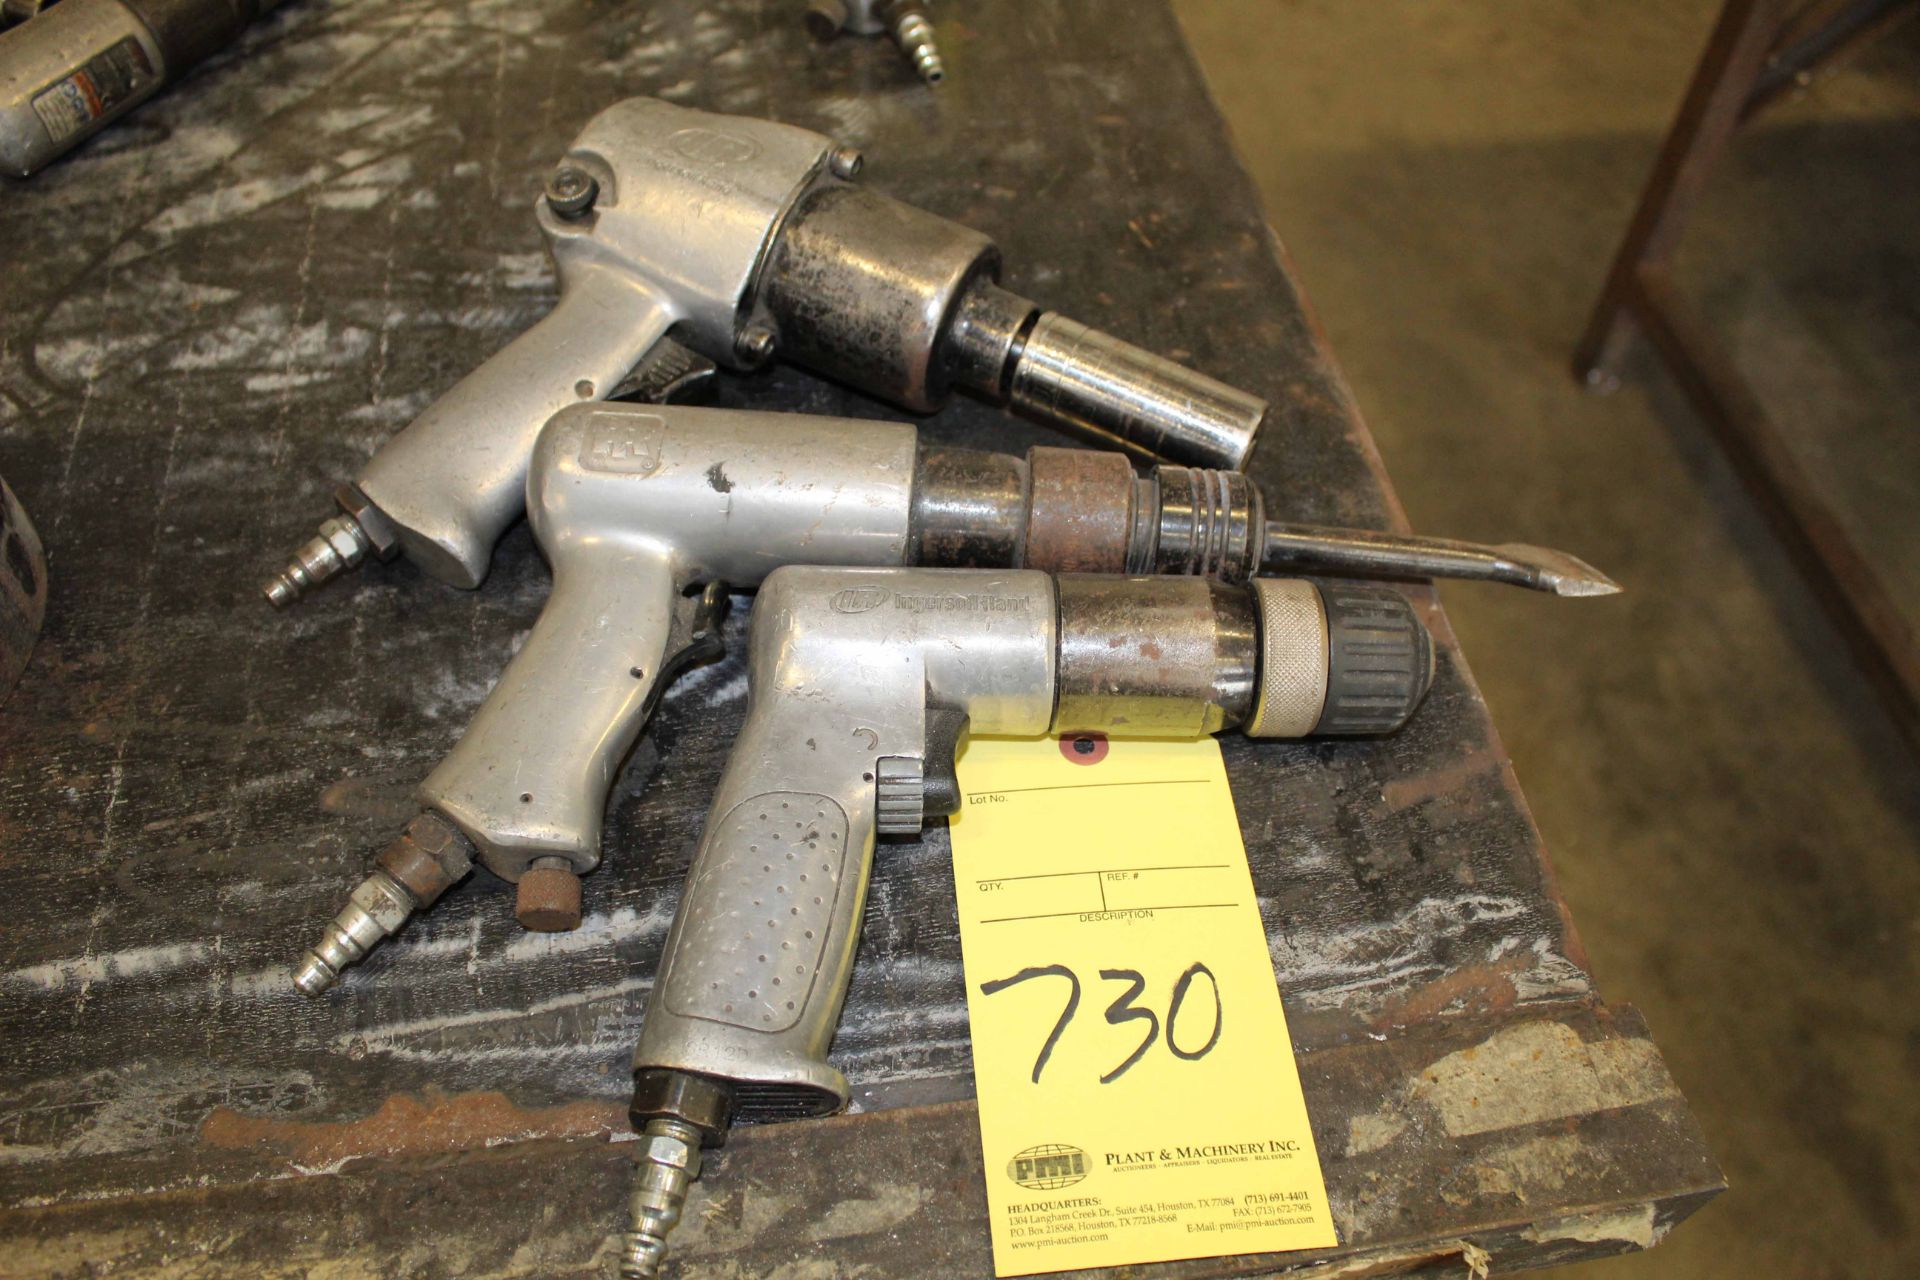 LOT CONSISTING OF: pneumatic tools, impact, drill, air hammer